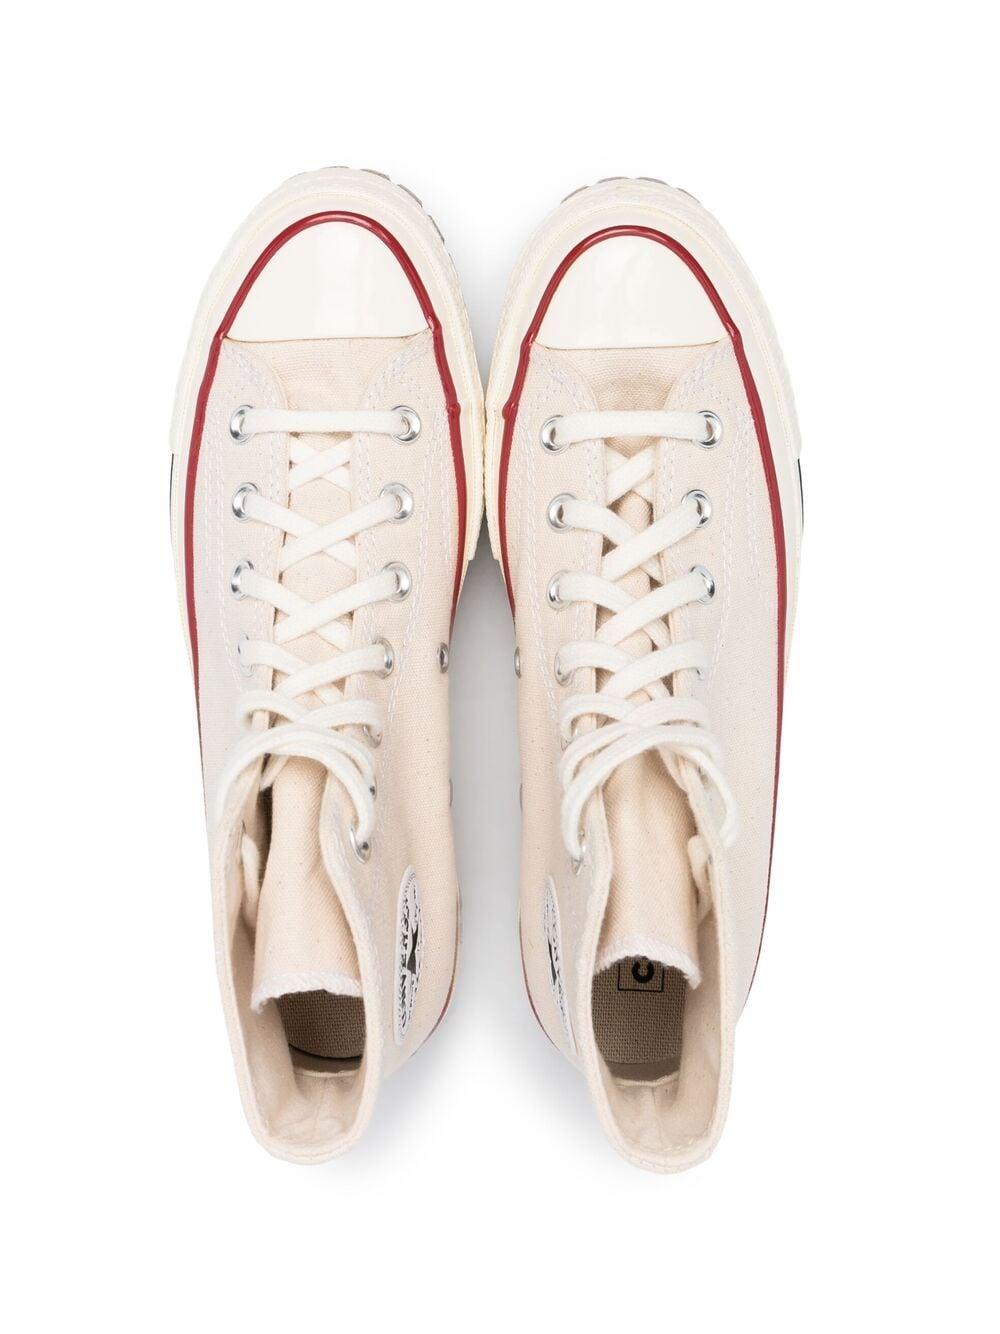 Converse Trek Chuck 70 Sneakers in White | Lyst